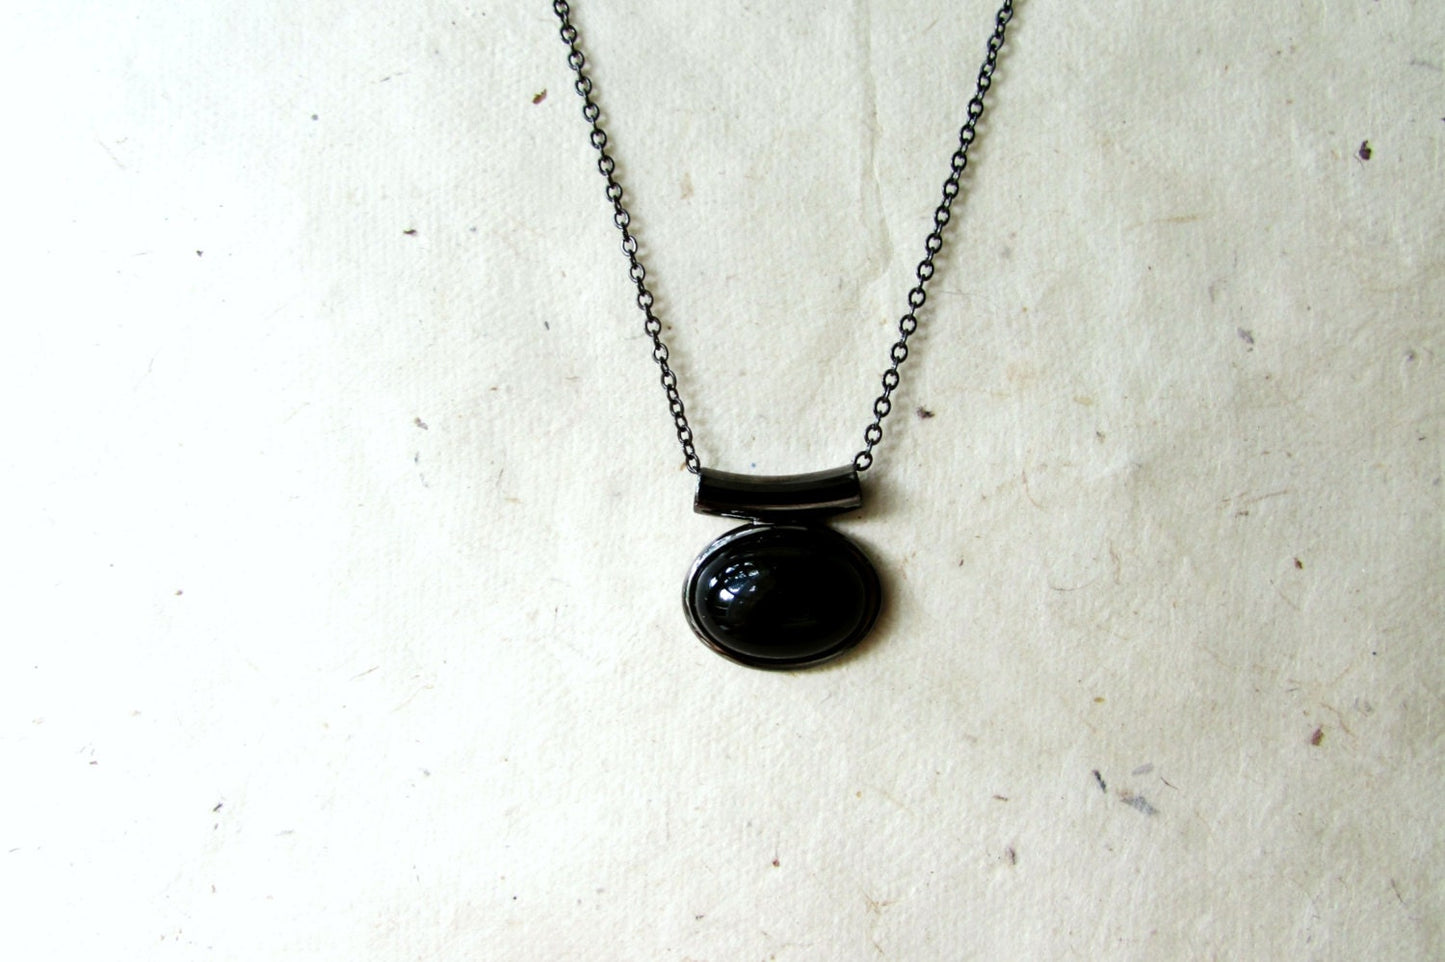 Jet Black Gemstone Necklace, Black Onyx Necklace, Minimalist Natural Stone Pendant Necklace, Onyx Cabochon Necklace in Gunmetal Silver